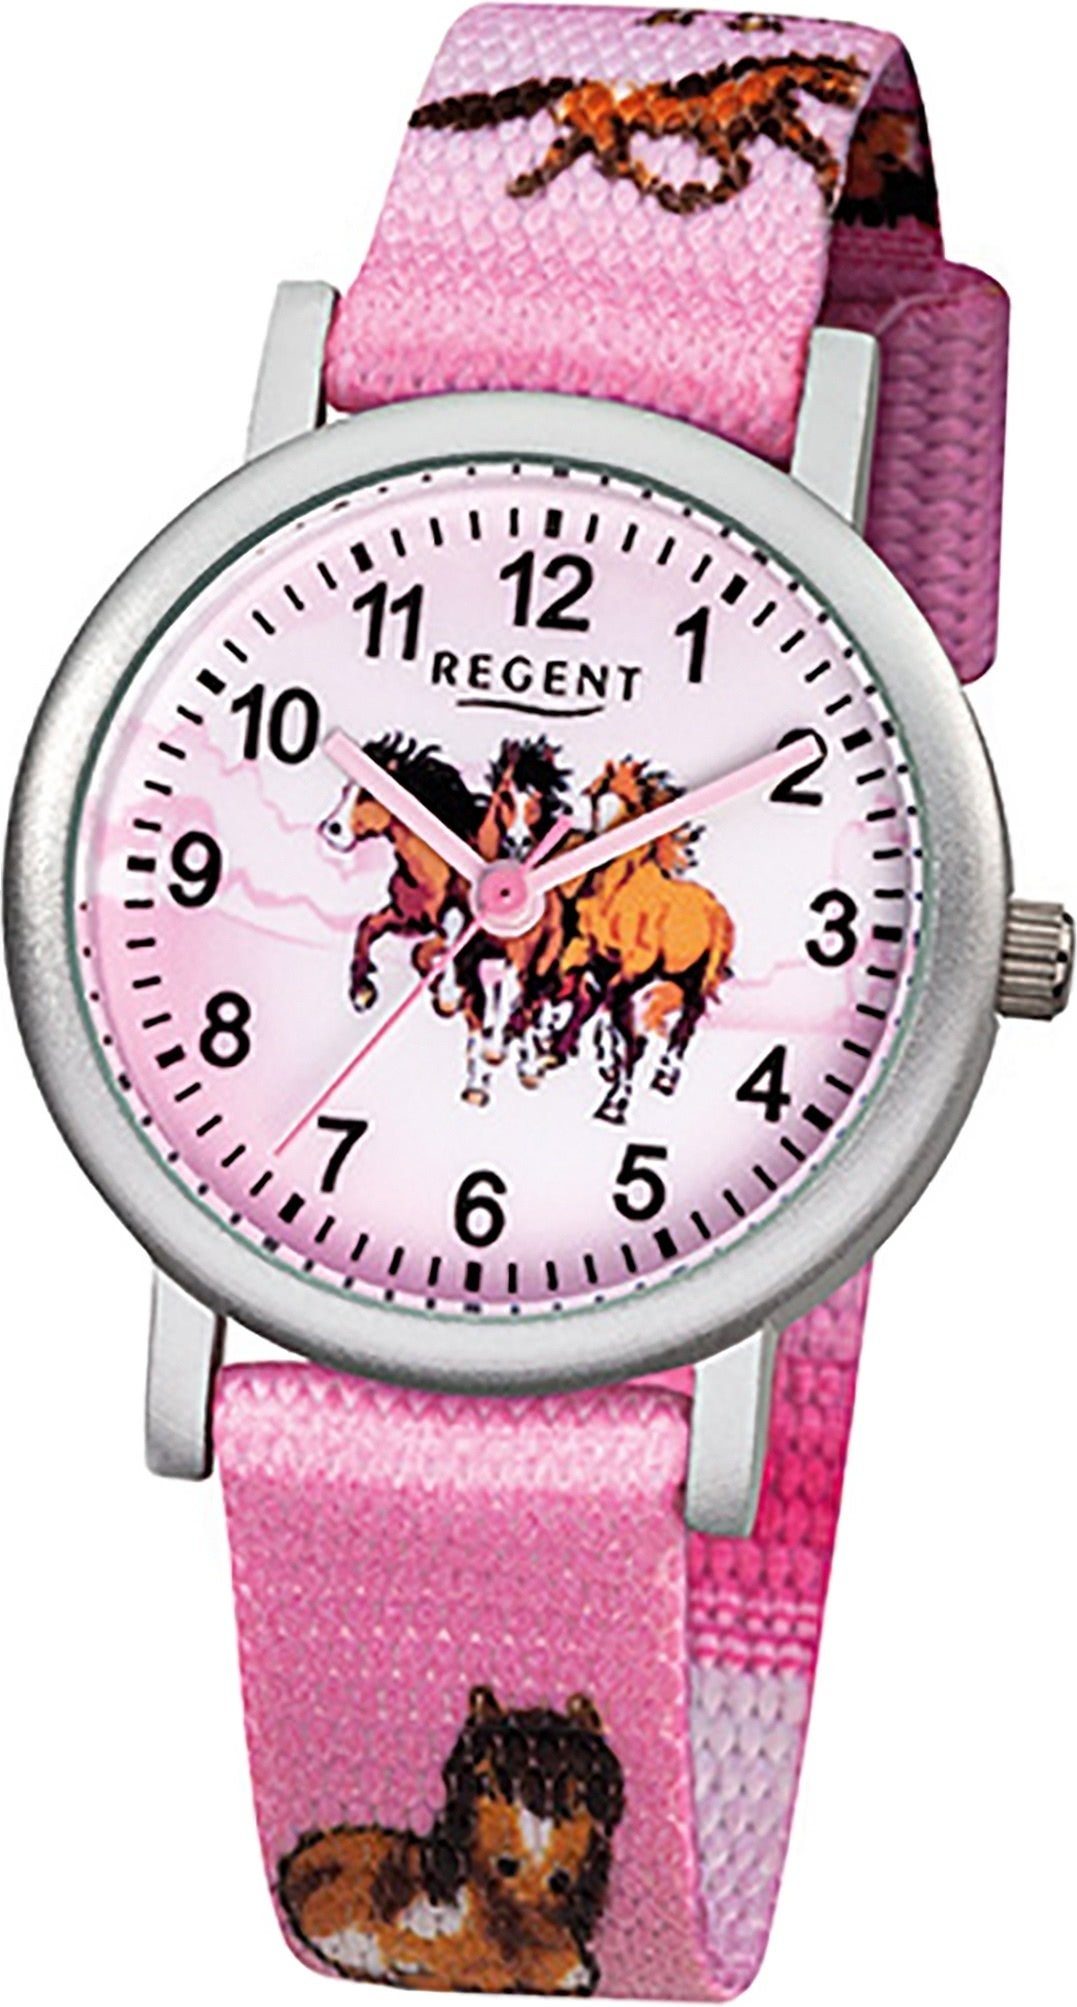 Uhr Gehäuse, 29mm) Quarzuhr, Regent rosa, Kinderuhr klein Quarzuhr rundes F-729 Regent (ca. Kinder Textil Textilarmband